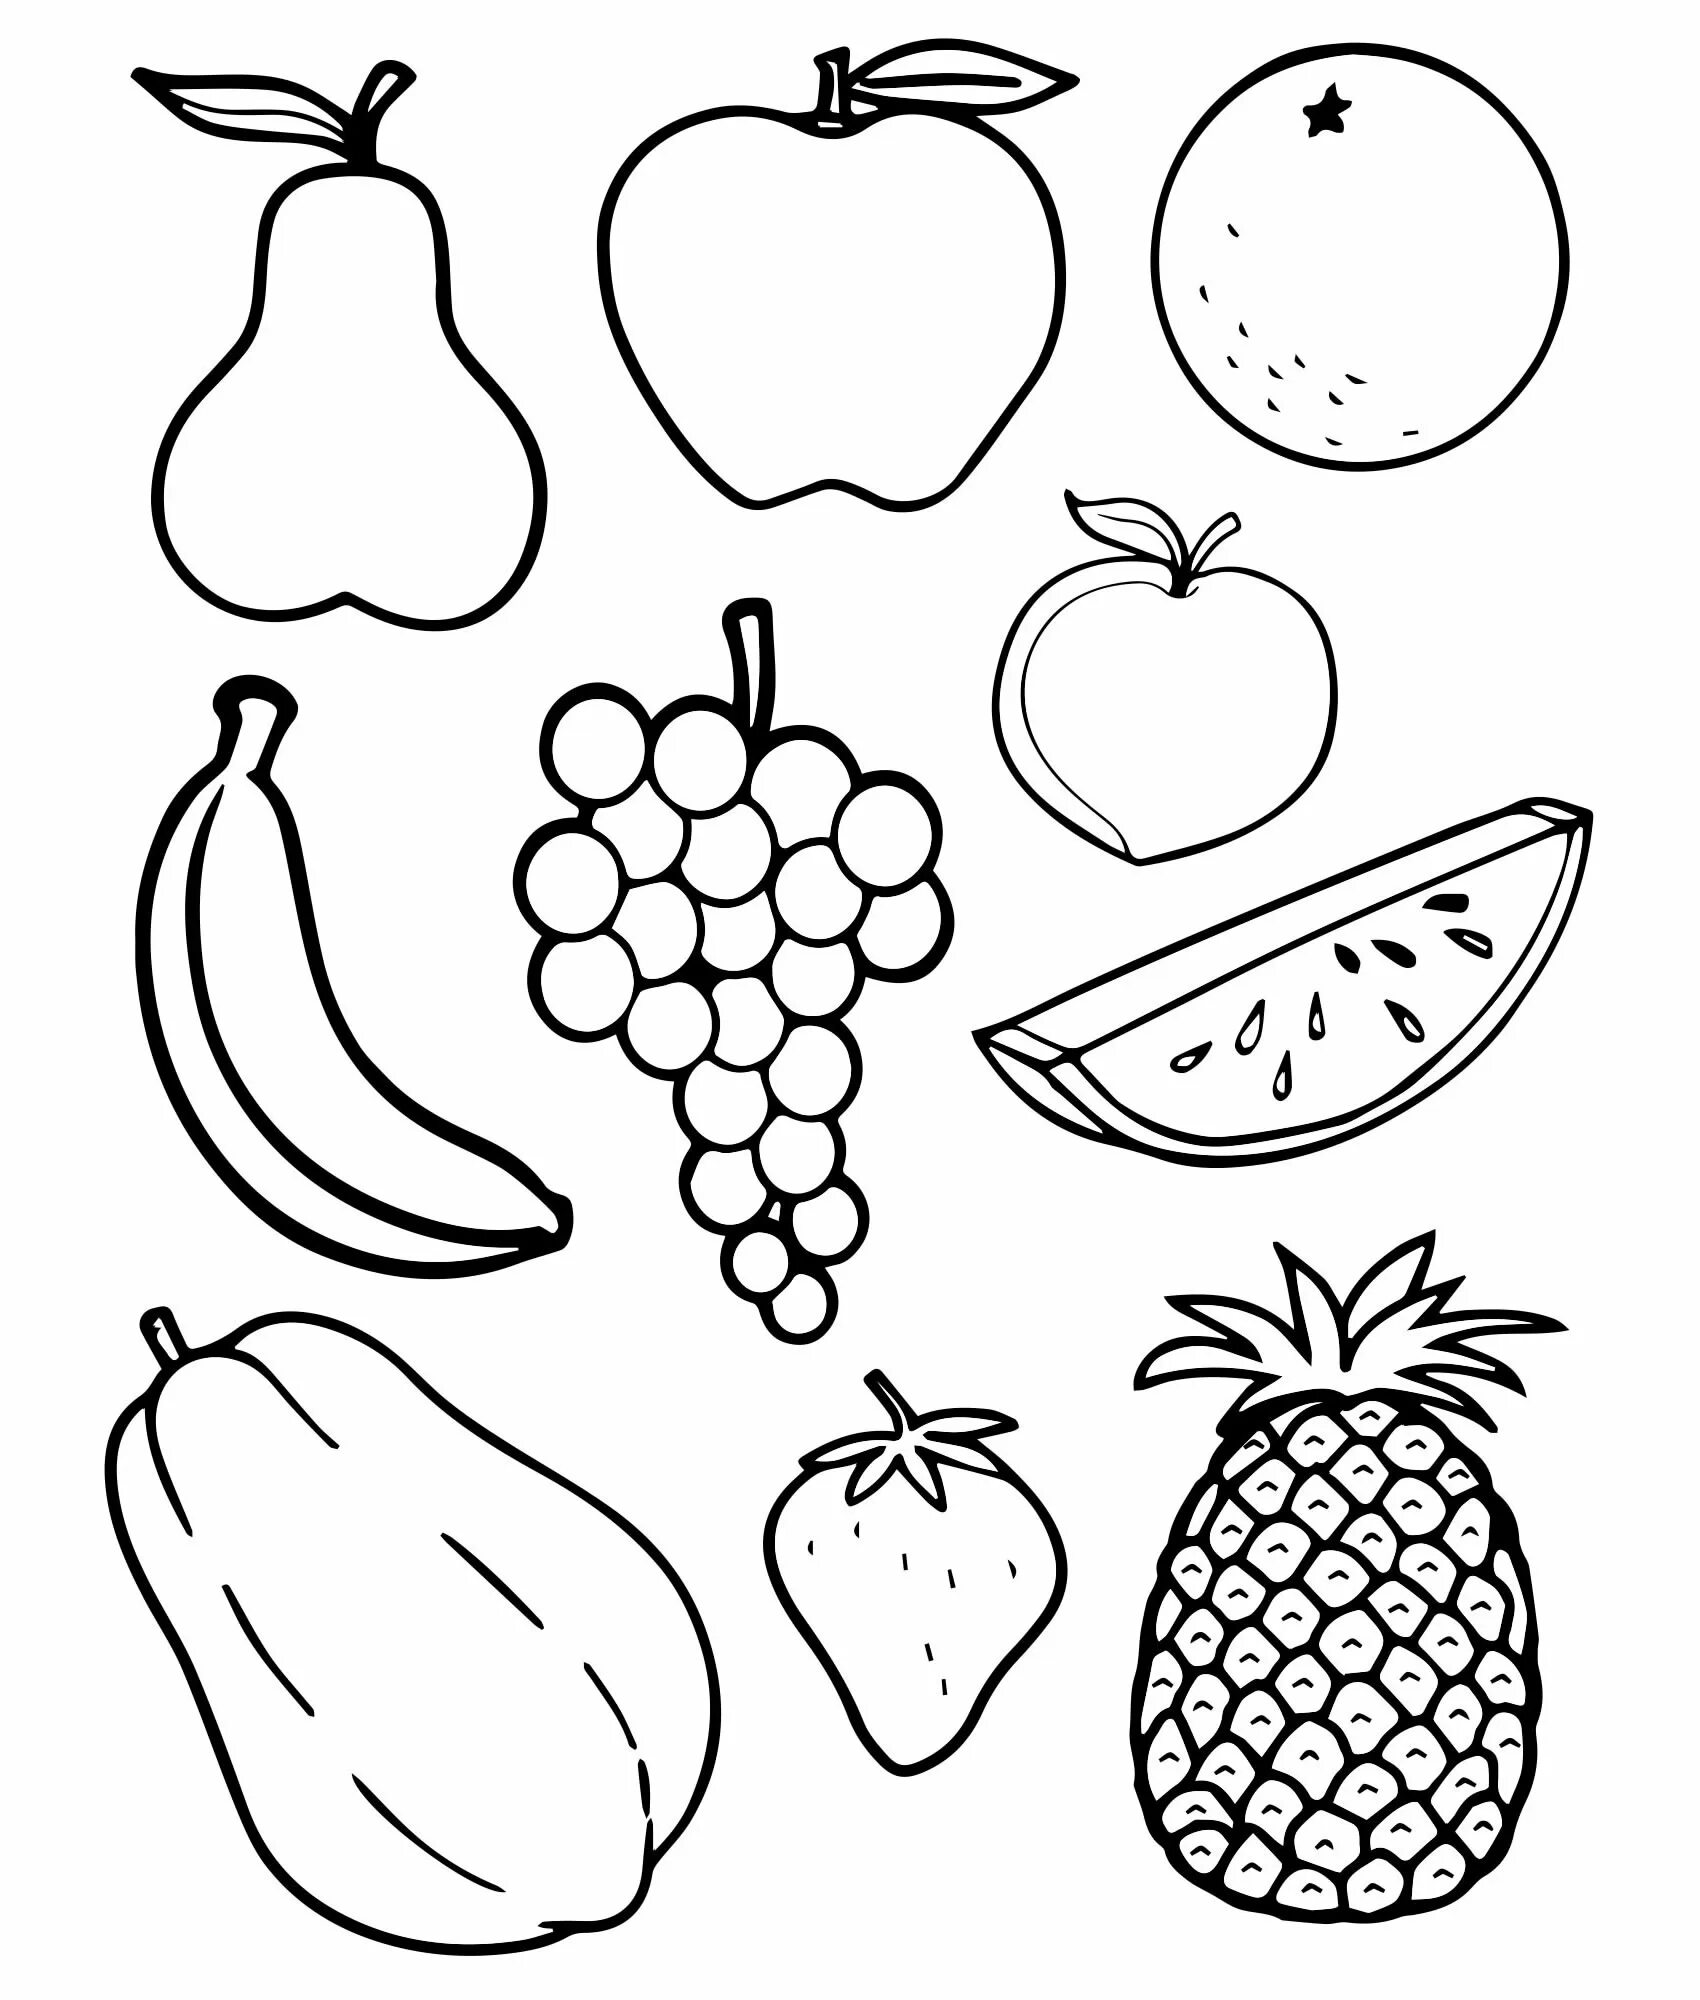 Fruit print #11